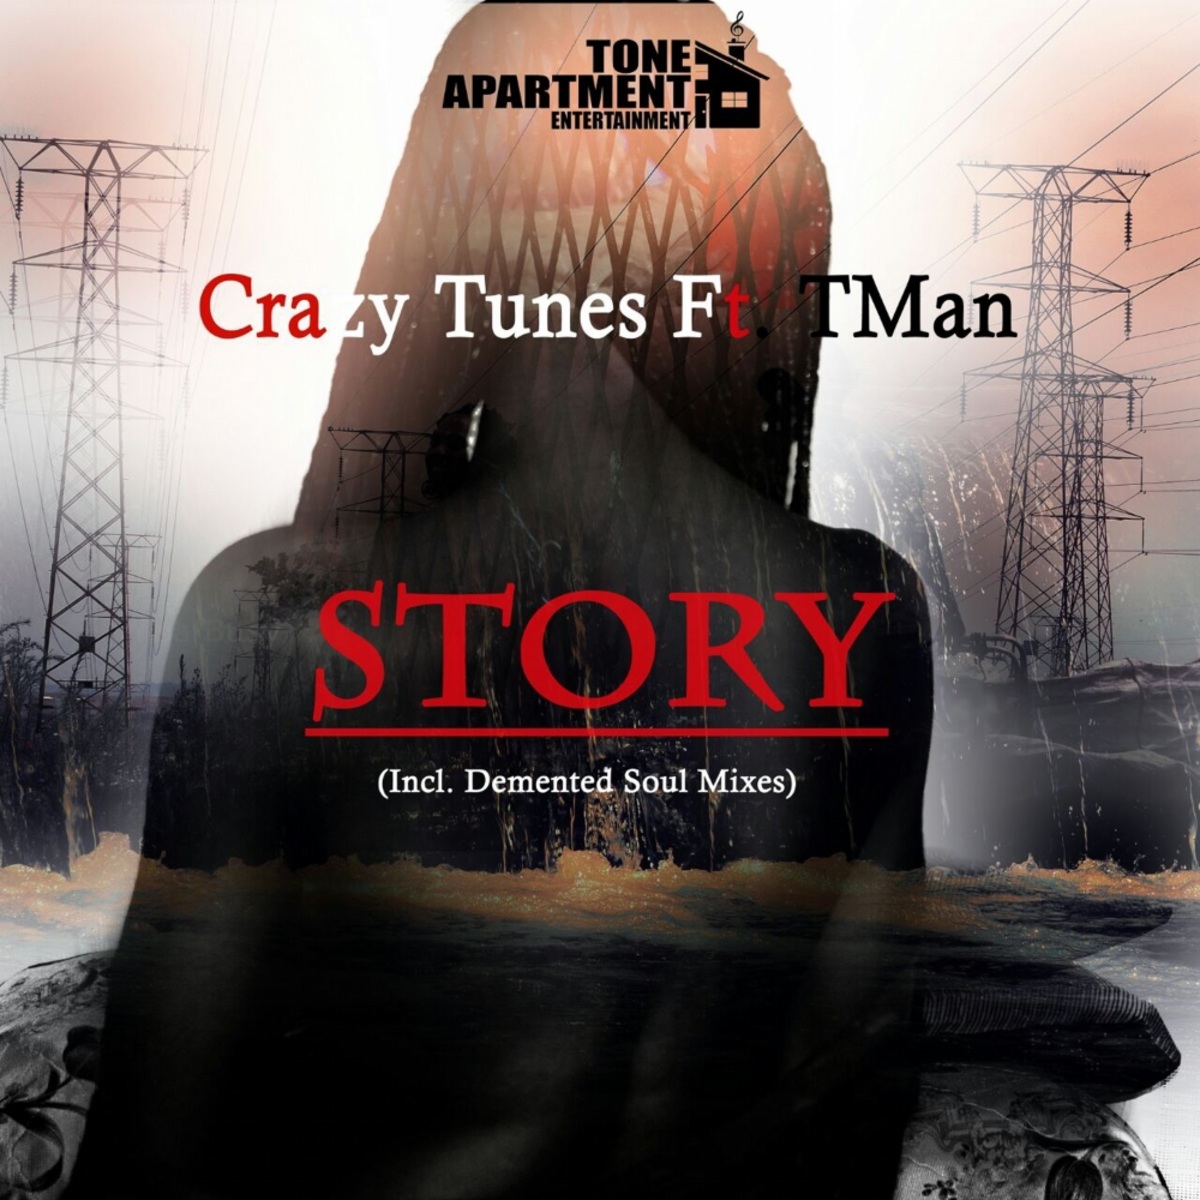 Crazy Tunes - Story / Tone Apartment Entertainment